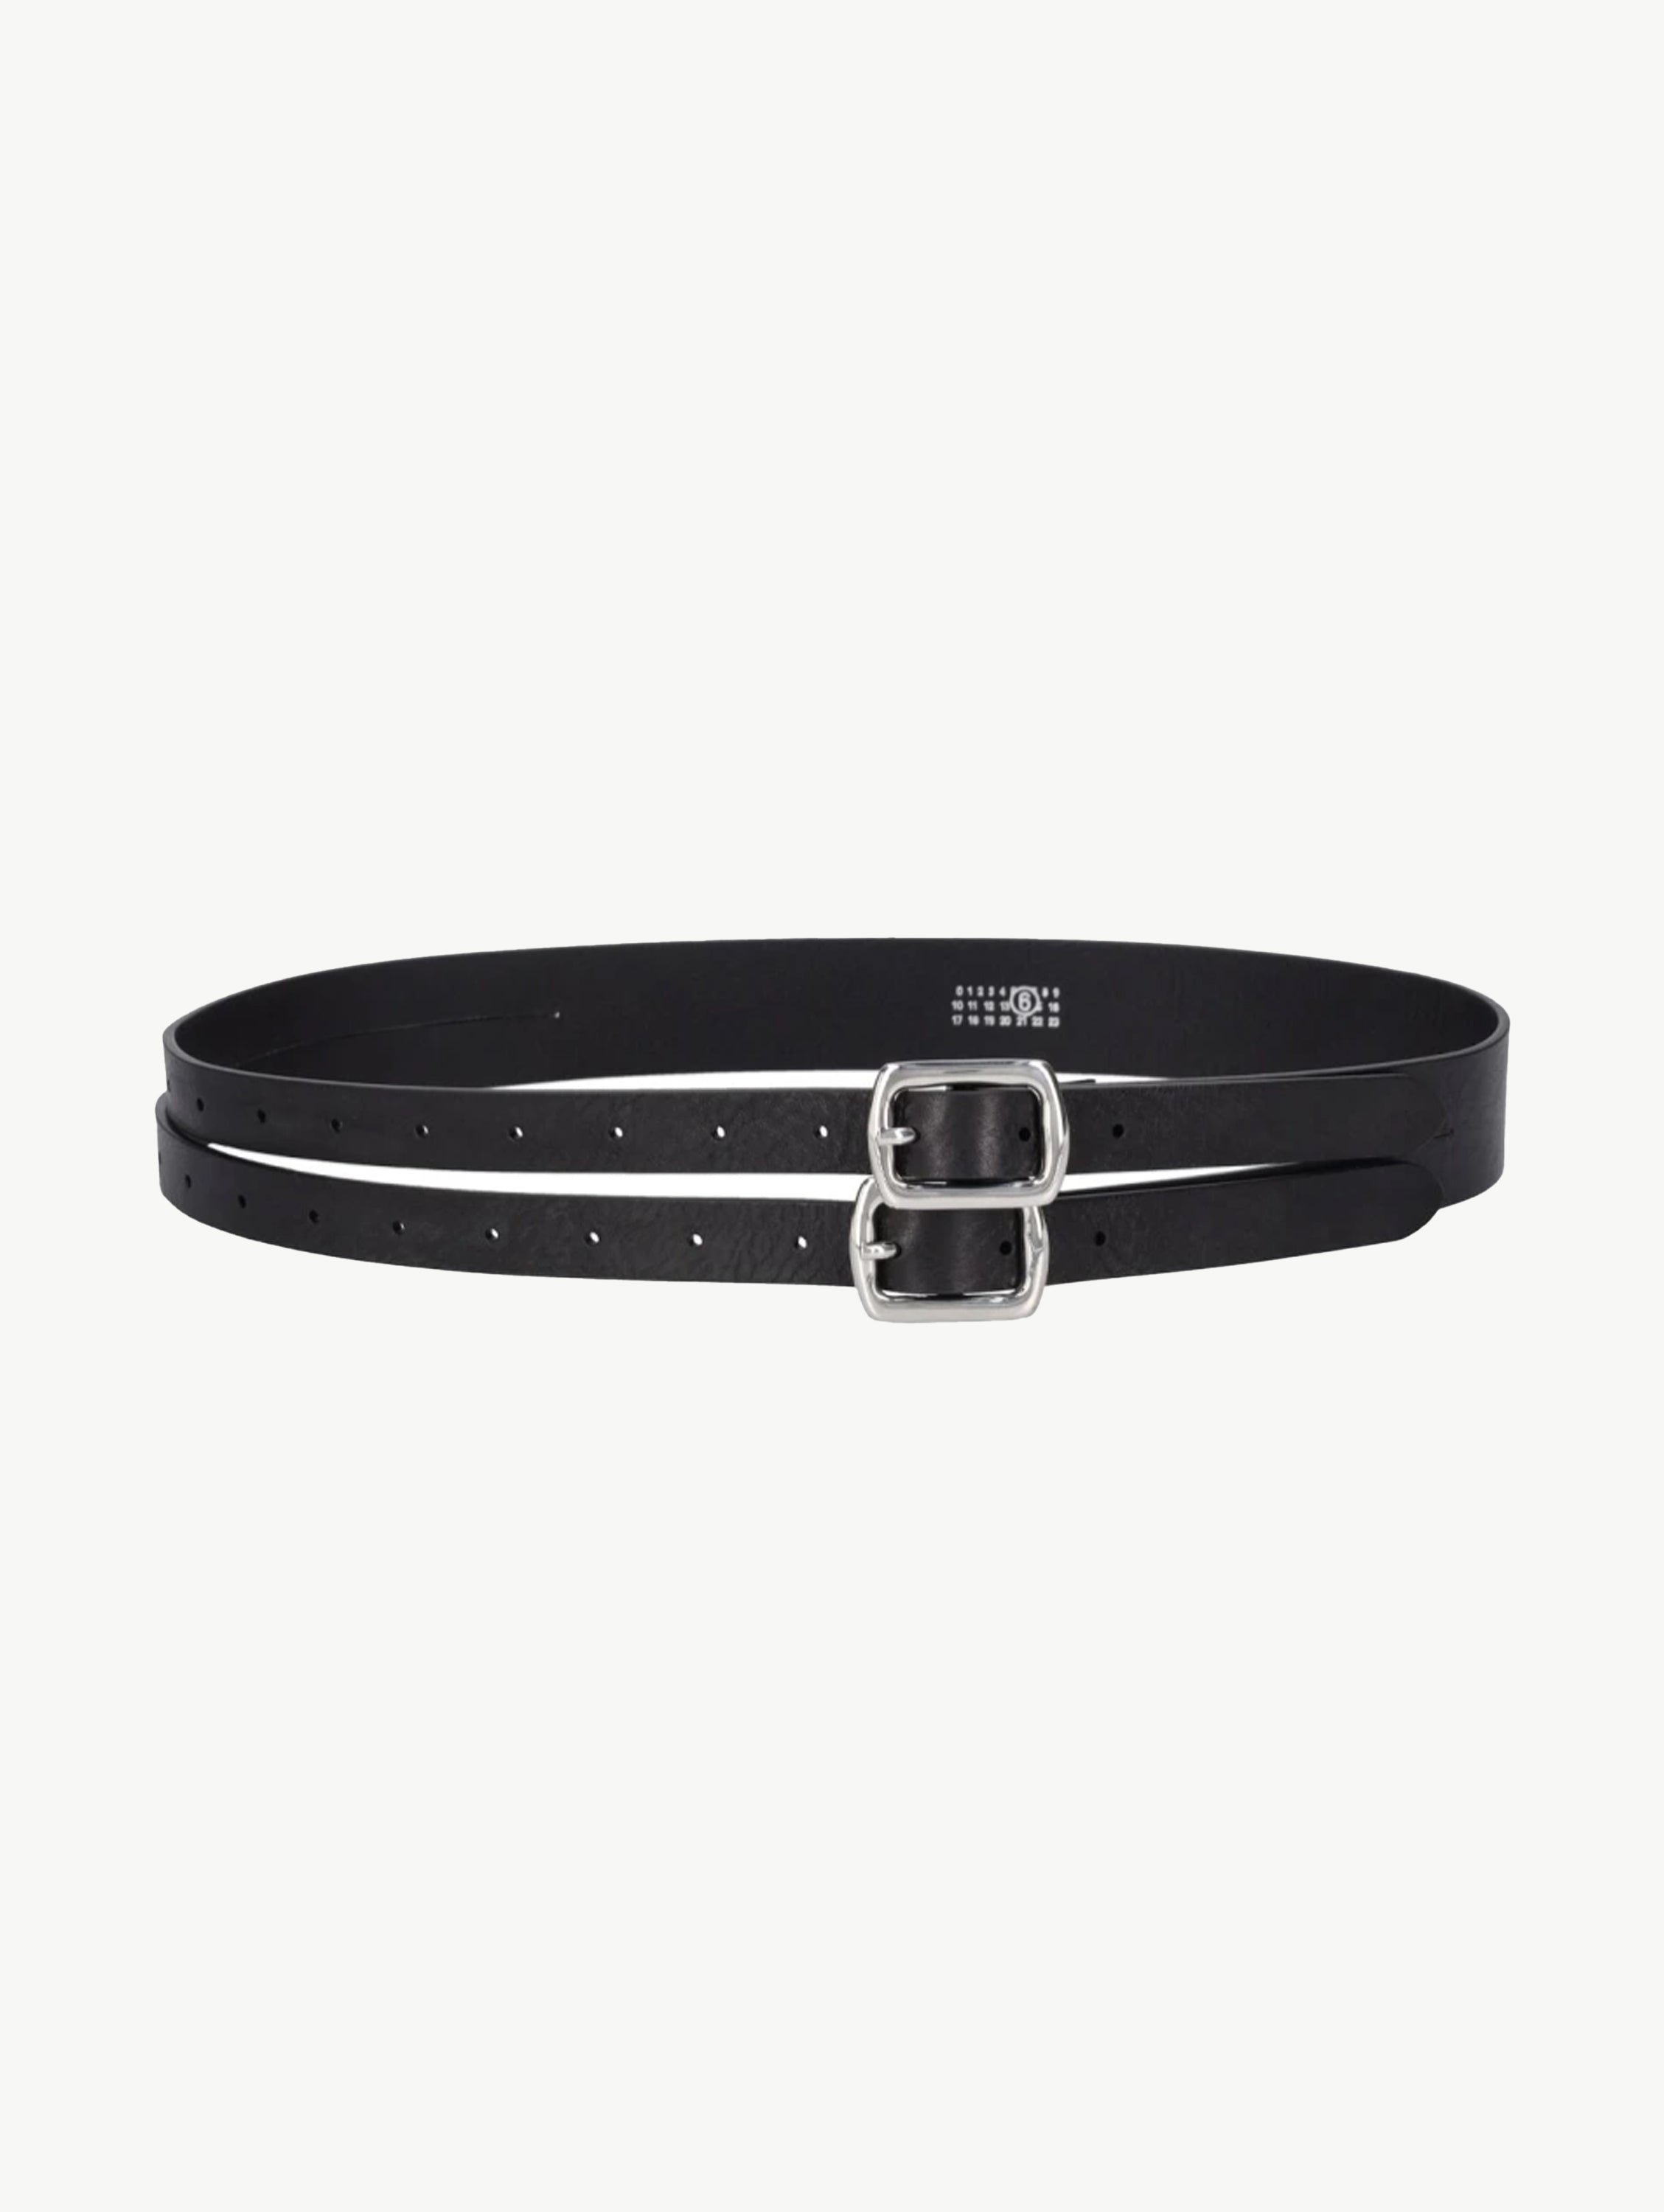 Double leather buckle belt